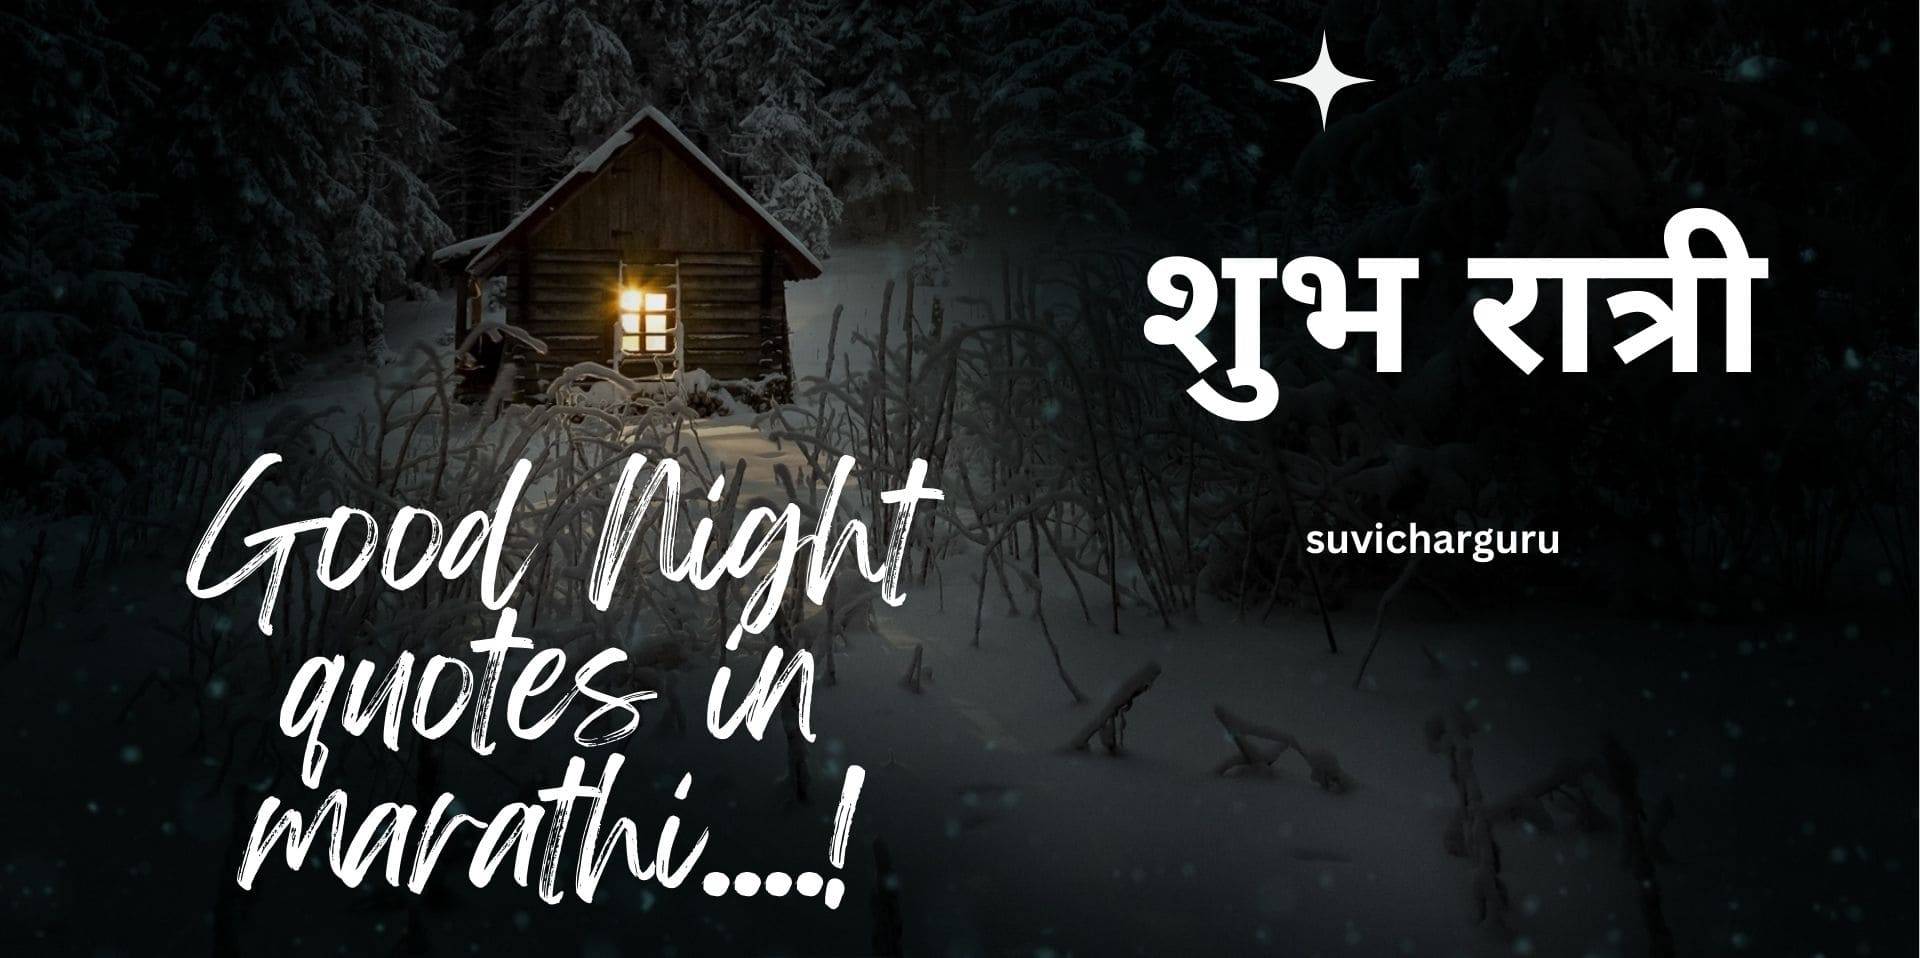 Good night quotes in marathi |150+शुभ रात्री शुभेच्छा संदेश मराठी